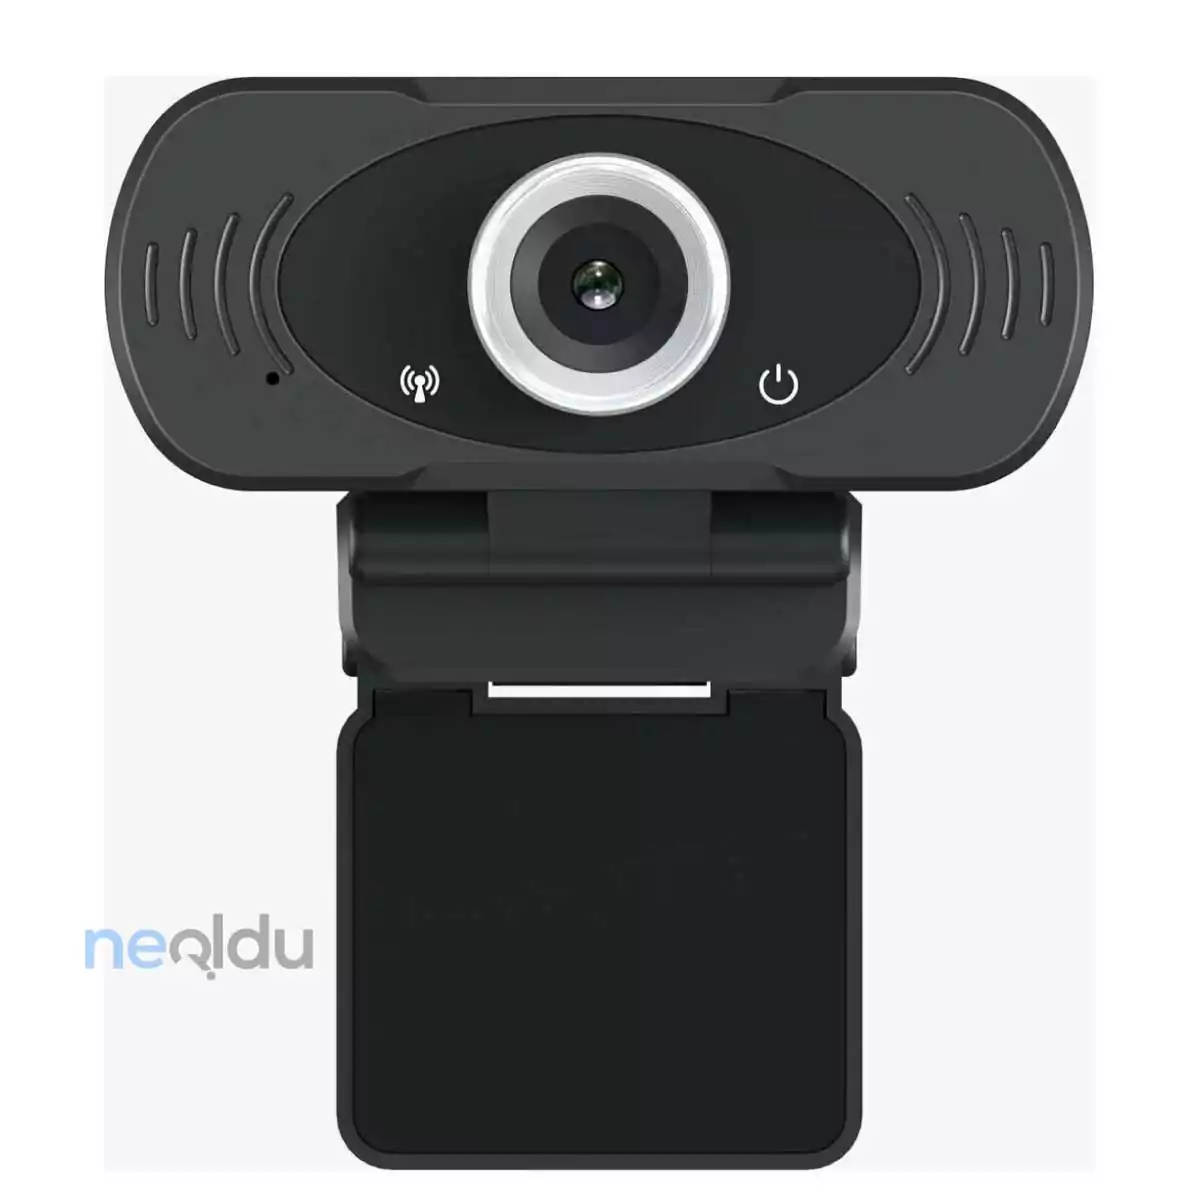 en-iyi-webcam-onerisi-001.webp